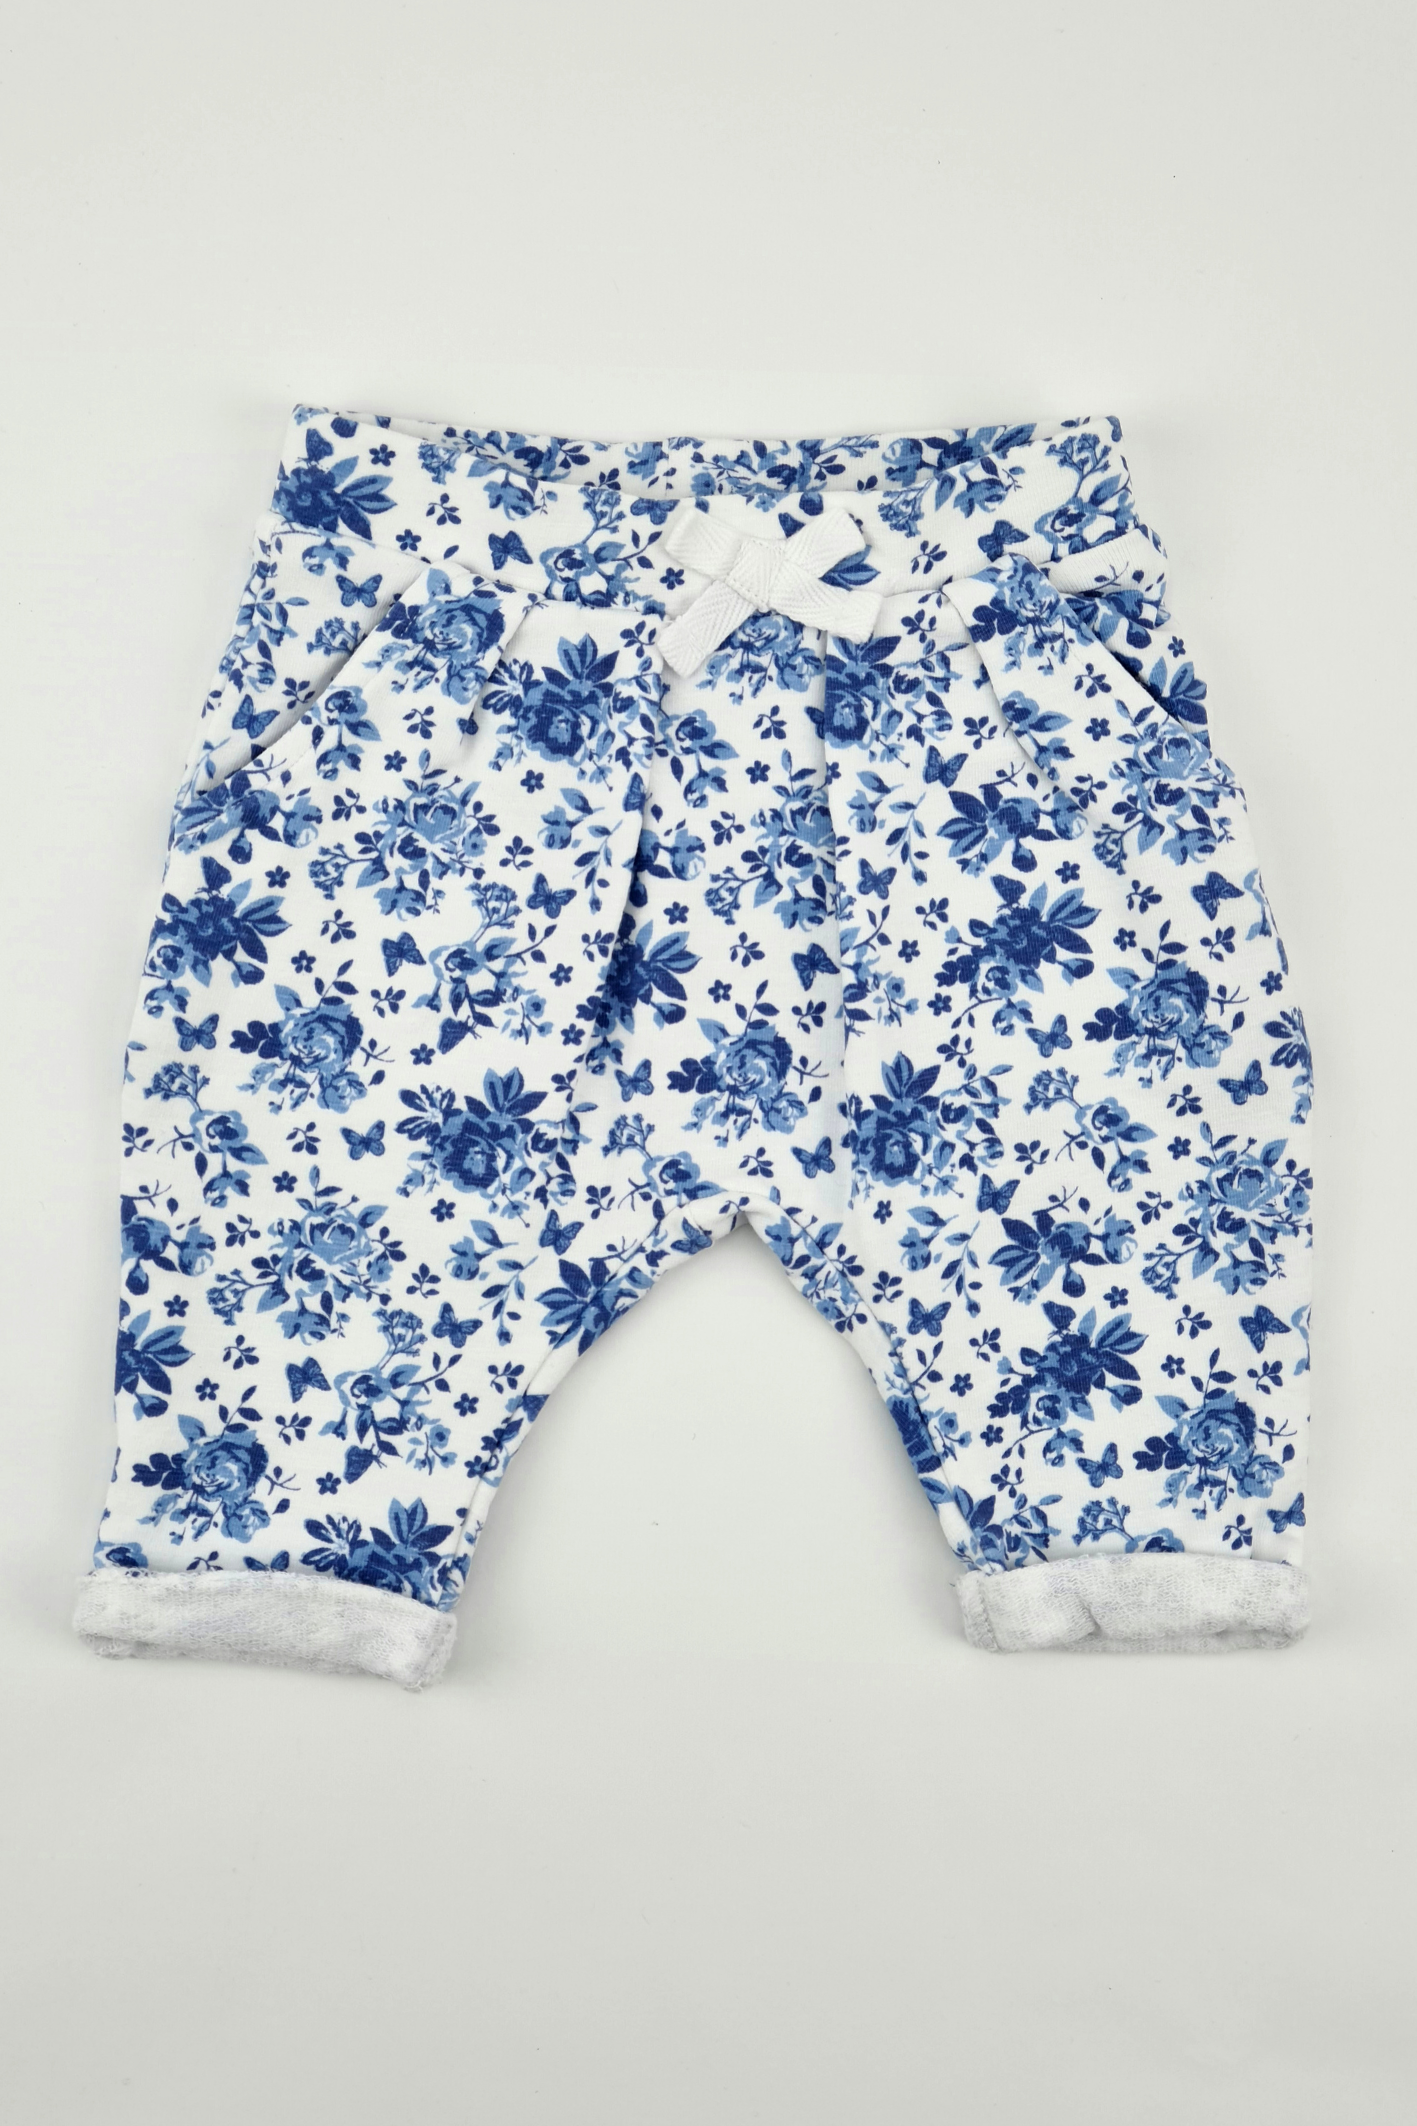 Neugeborenes (7 Pfund) - Blaue Jogginghose mit Blumenmuster (Muskatnuss)